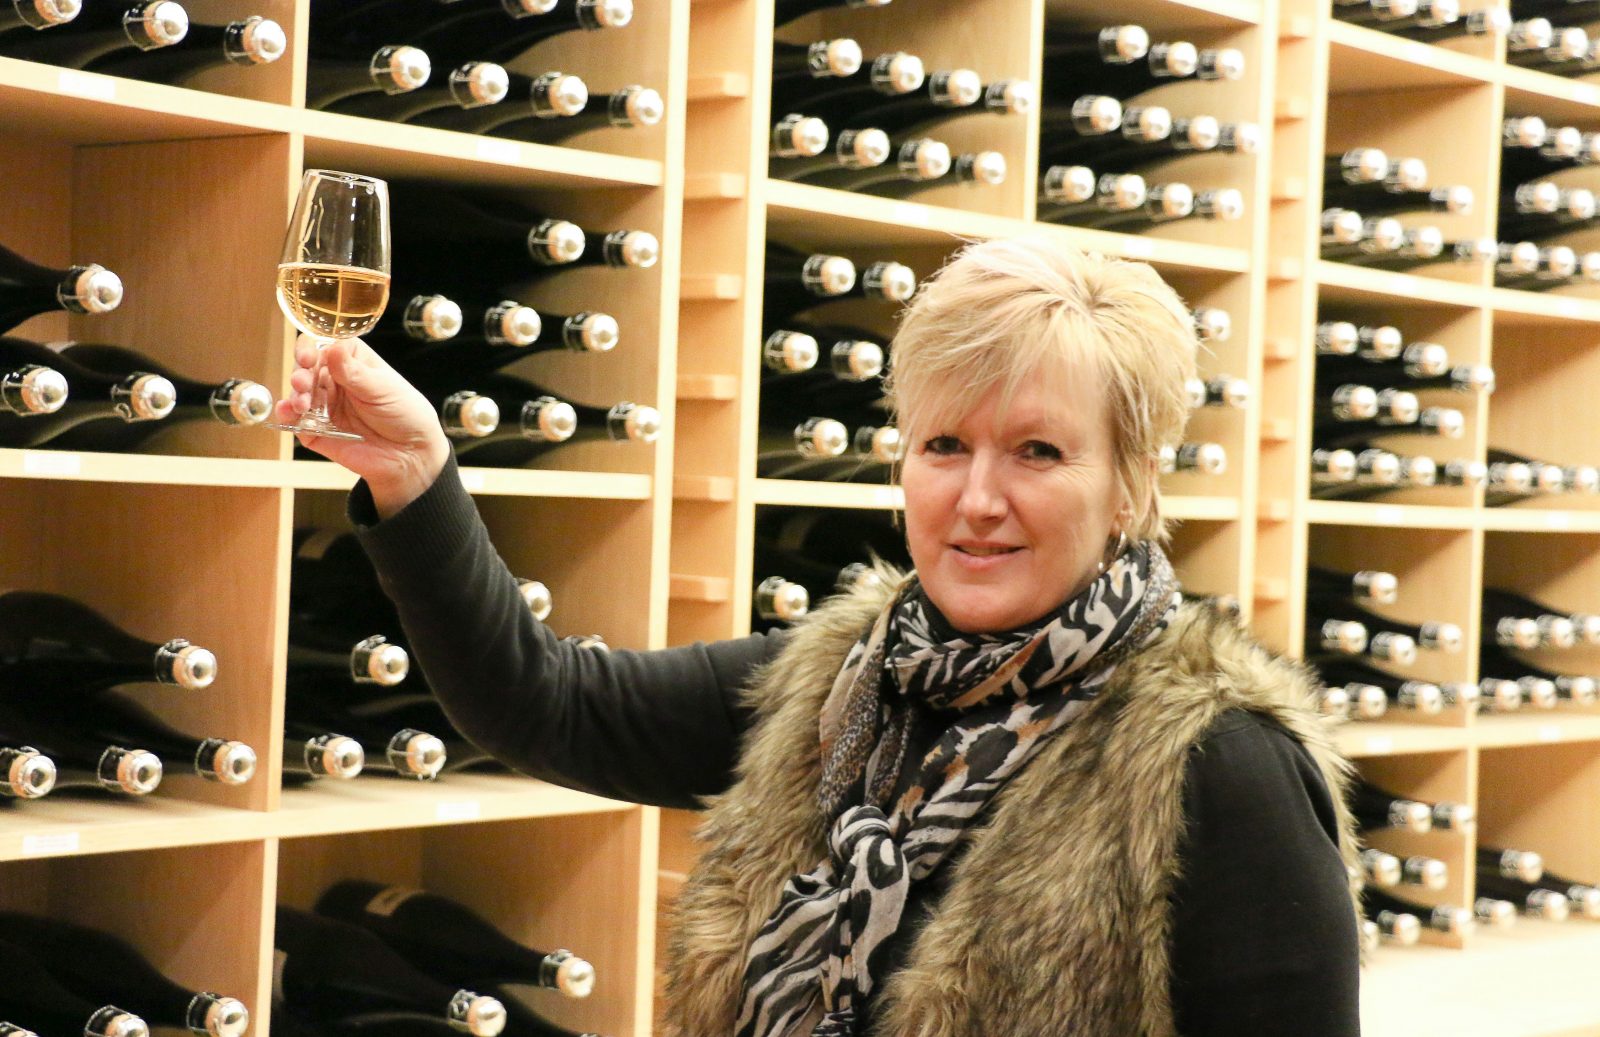 Woman in wine cellar raises a glass of white wine.